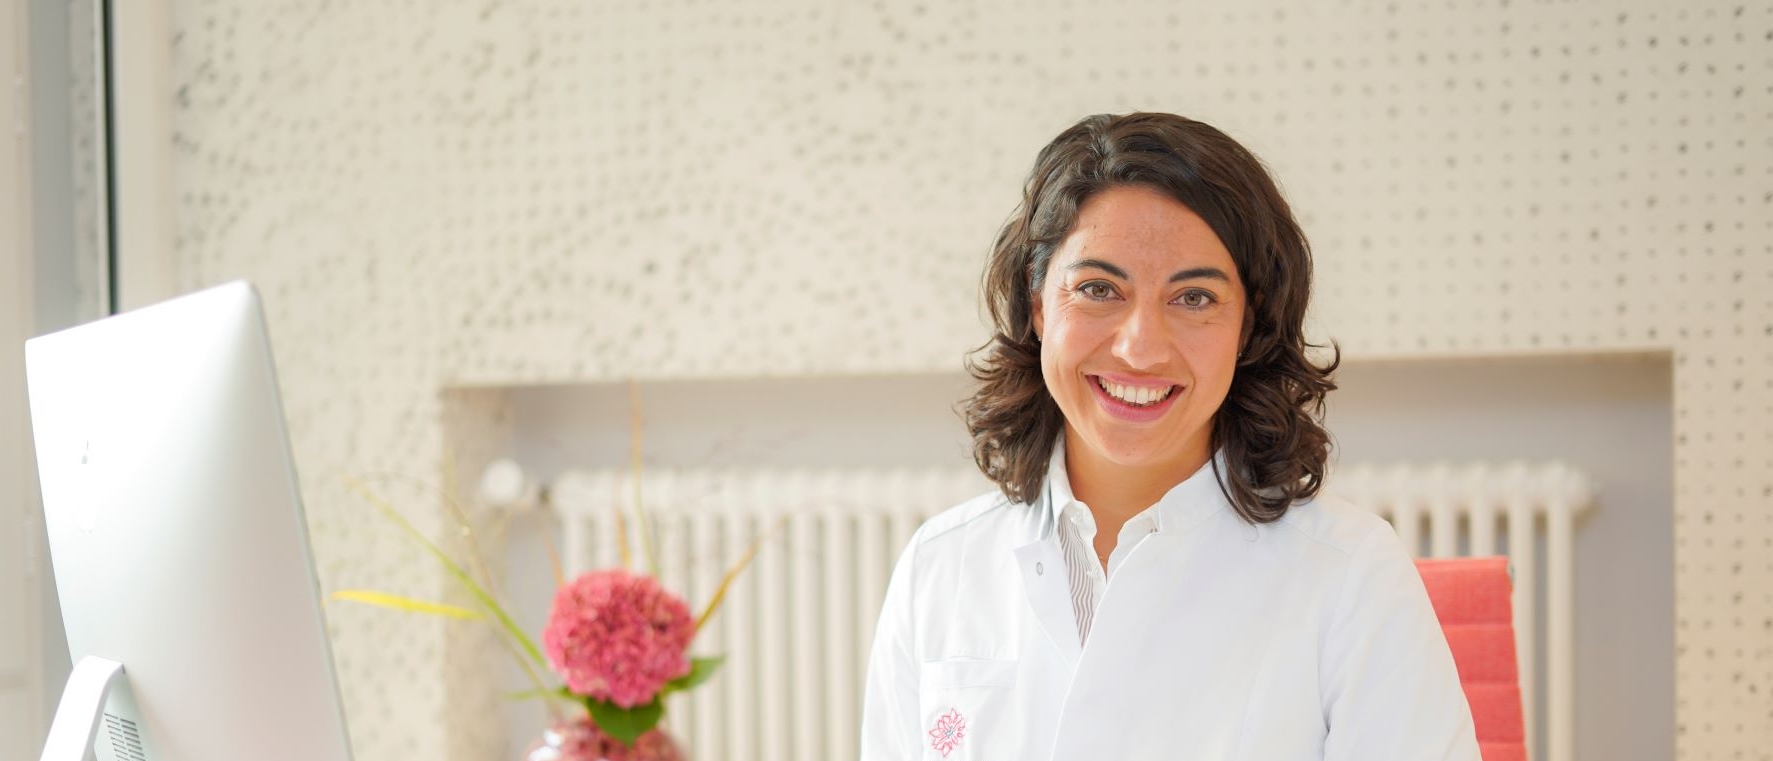 Dr. med. Nadine Al-Kaisi Kinderwunschklinik München